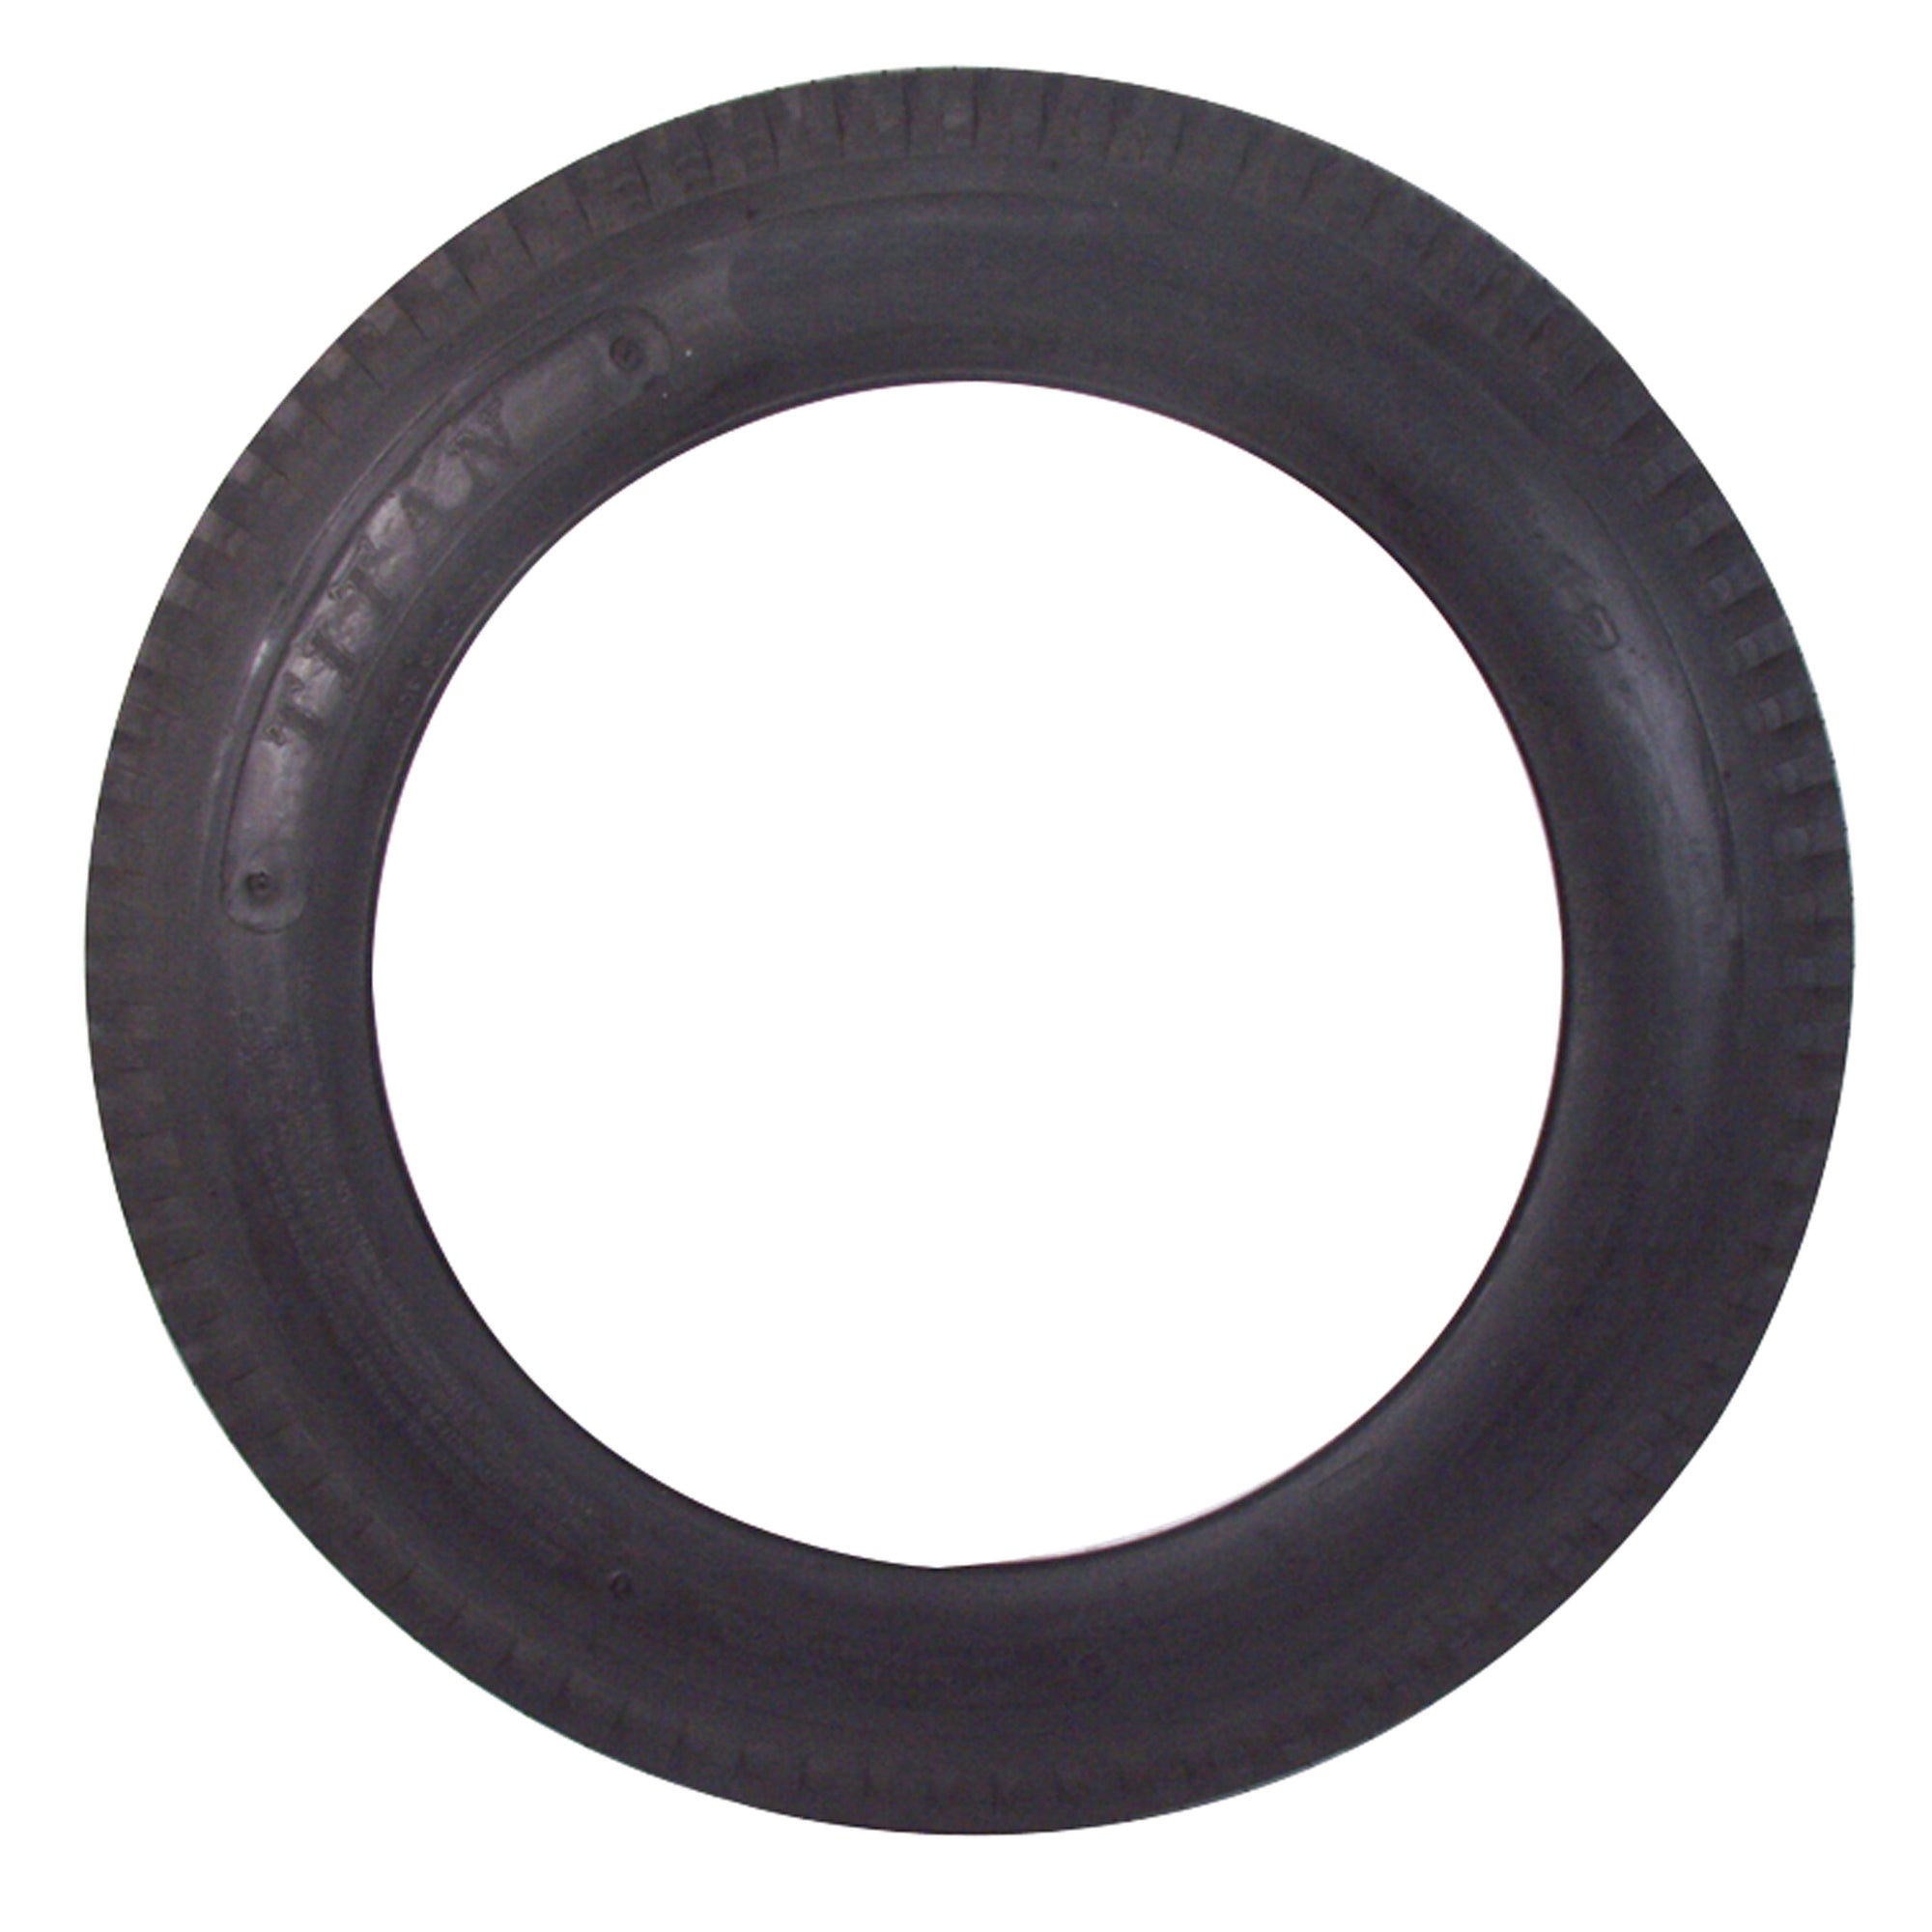 Tredit Tire & Wheel 724-864-519 Radial Tire Only - Endurance